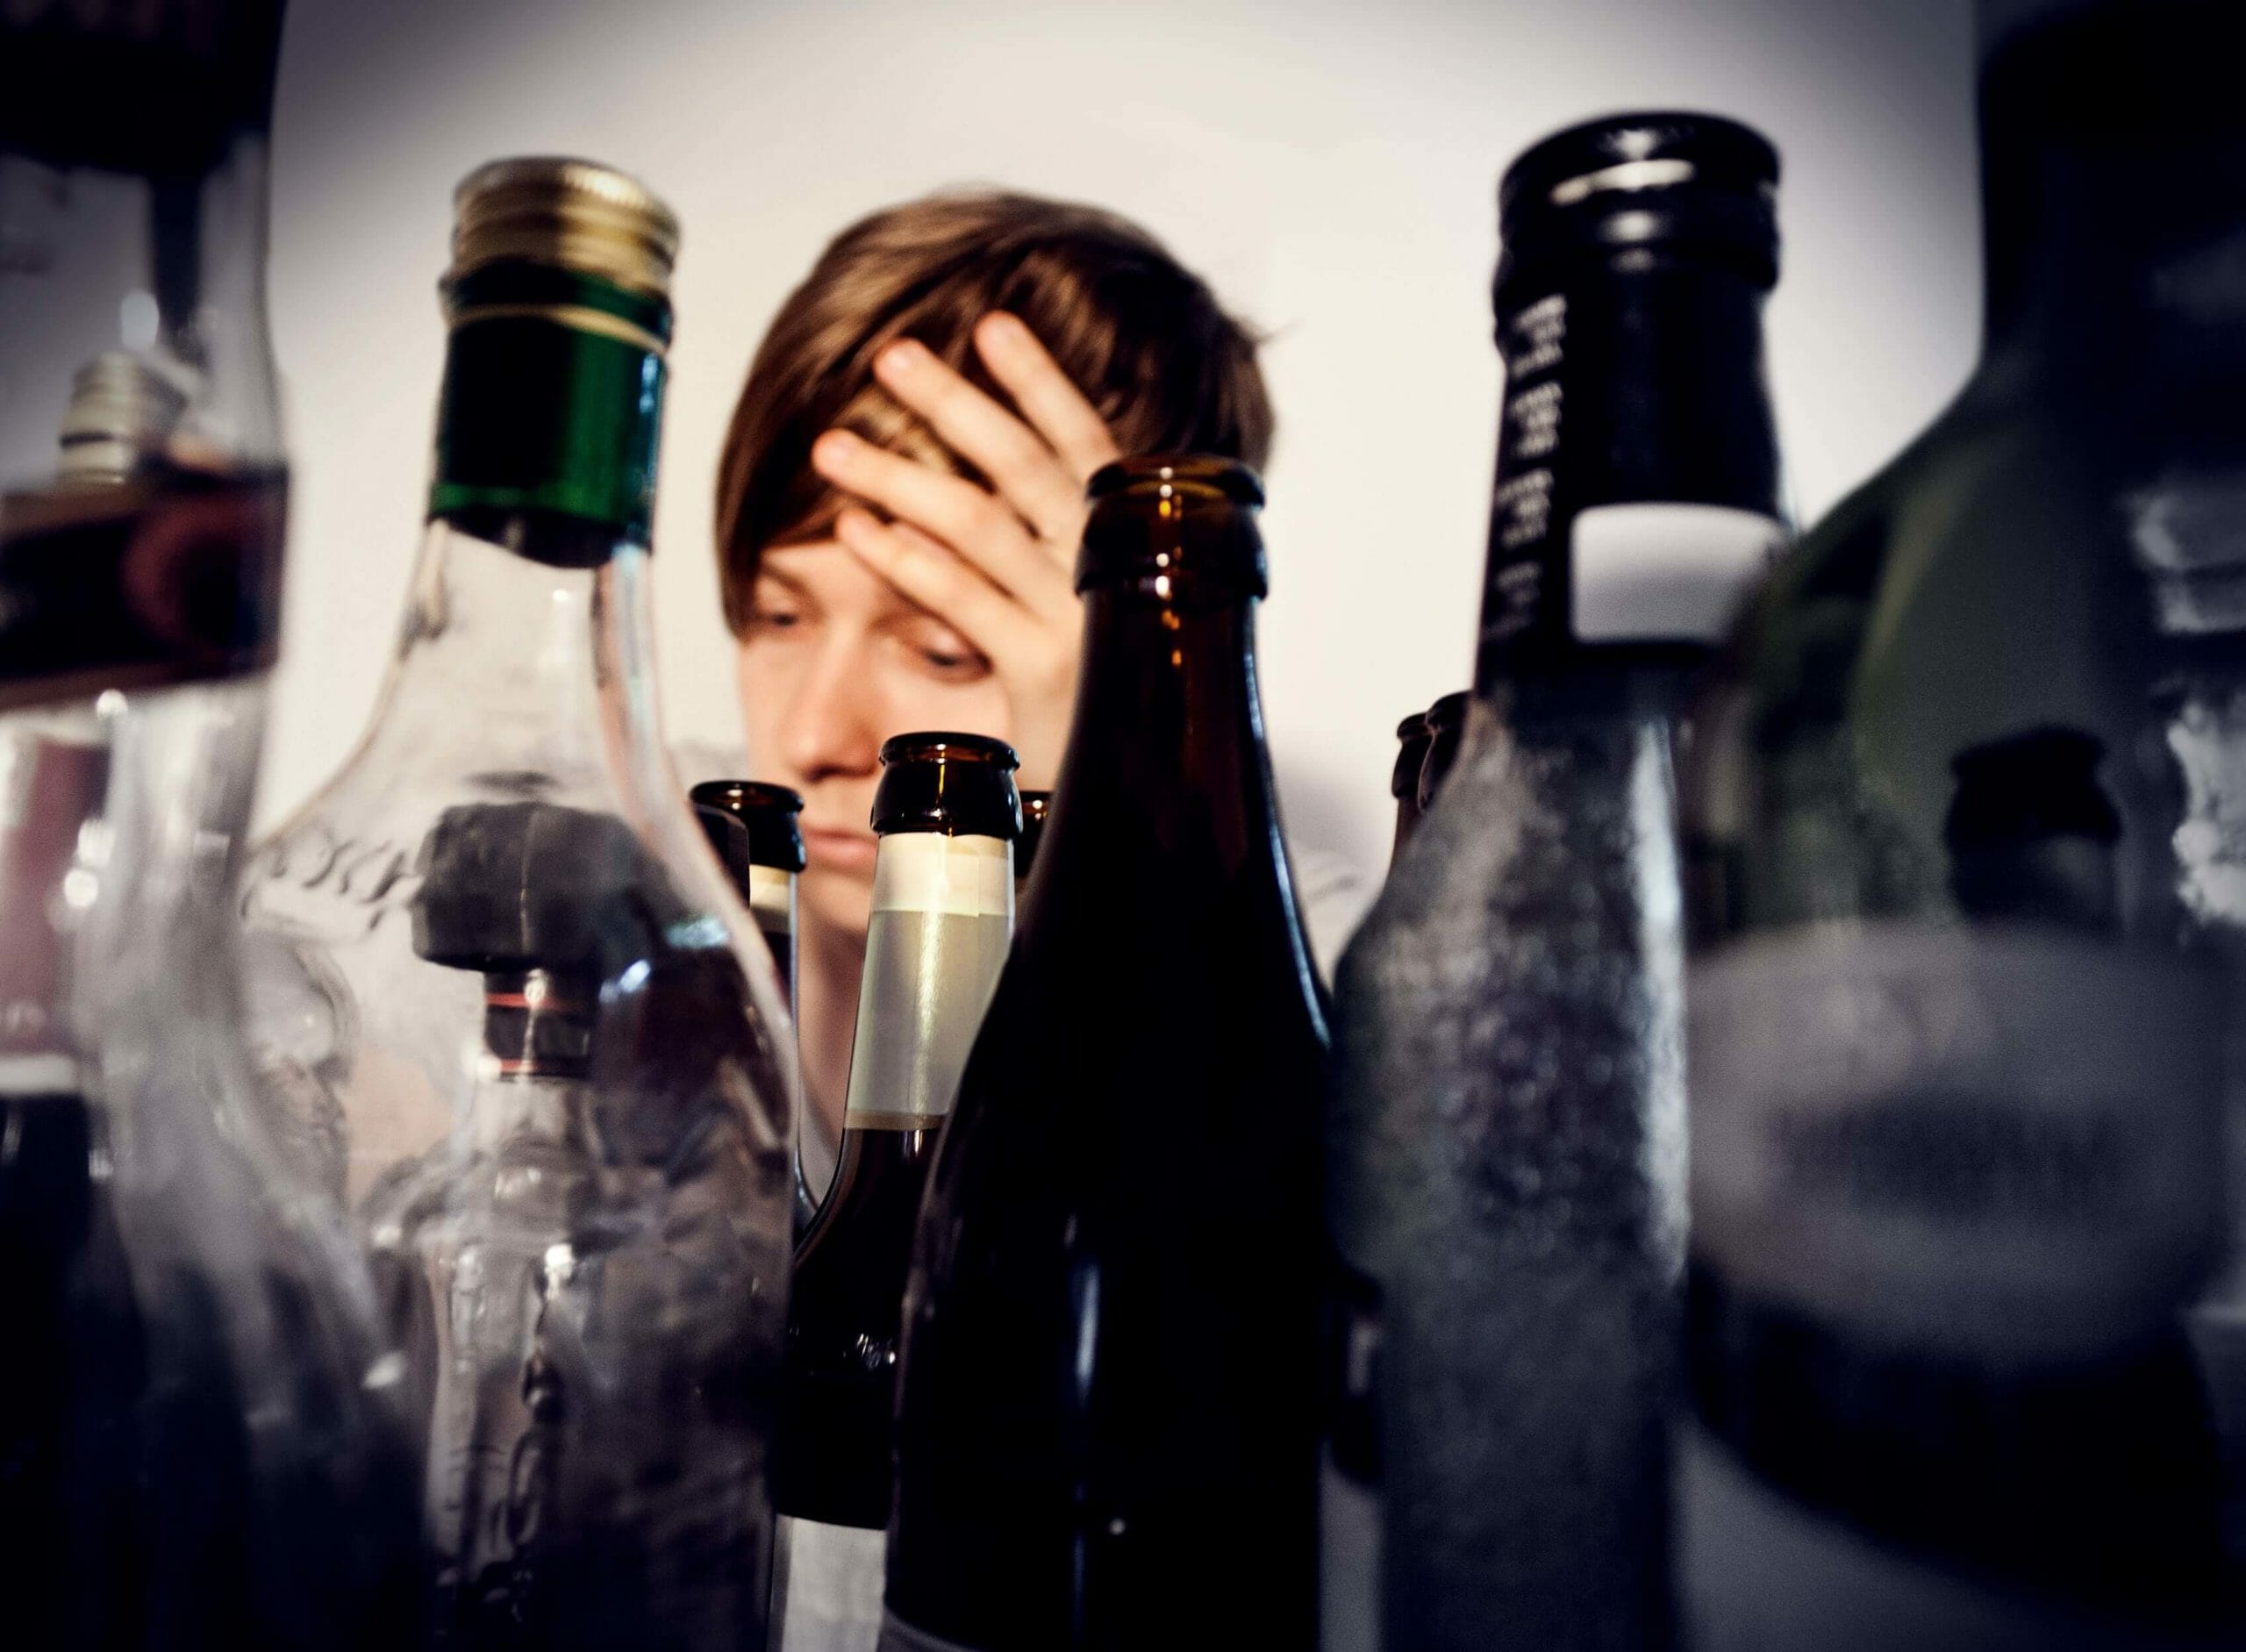 man experiencing alcohol withdrawal symptoms